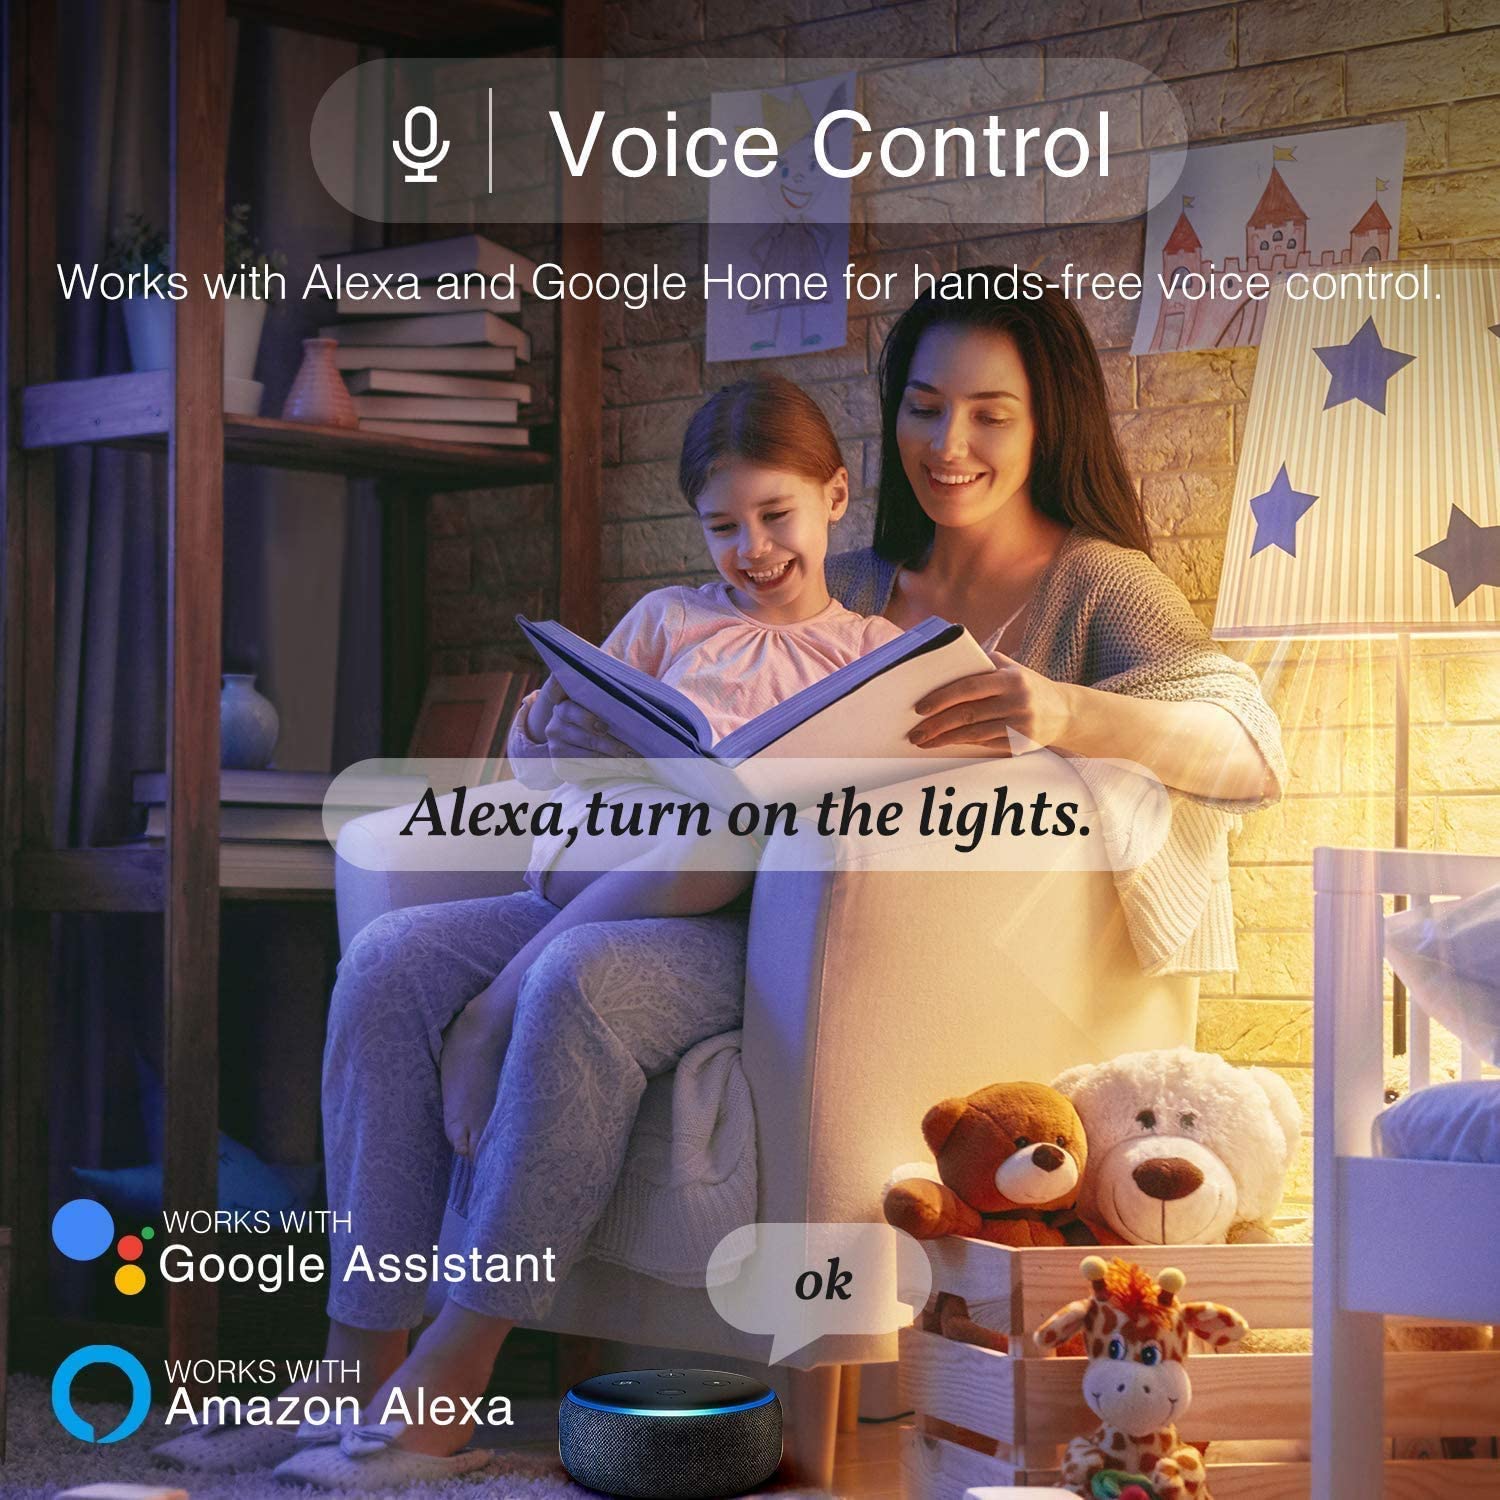 RGB LED Strip 12V WiFi Wireless Control IP65 Waterproof 300LEDs 5m Full Kit Work with Alexa and Google Home - ATOM LED